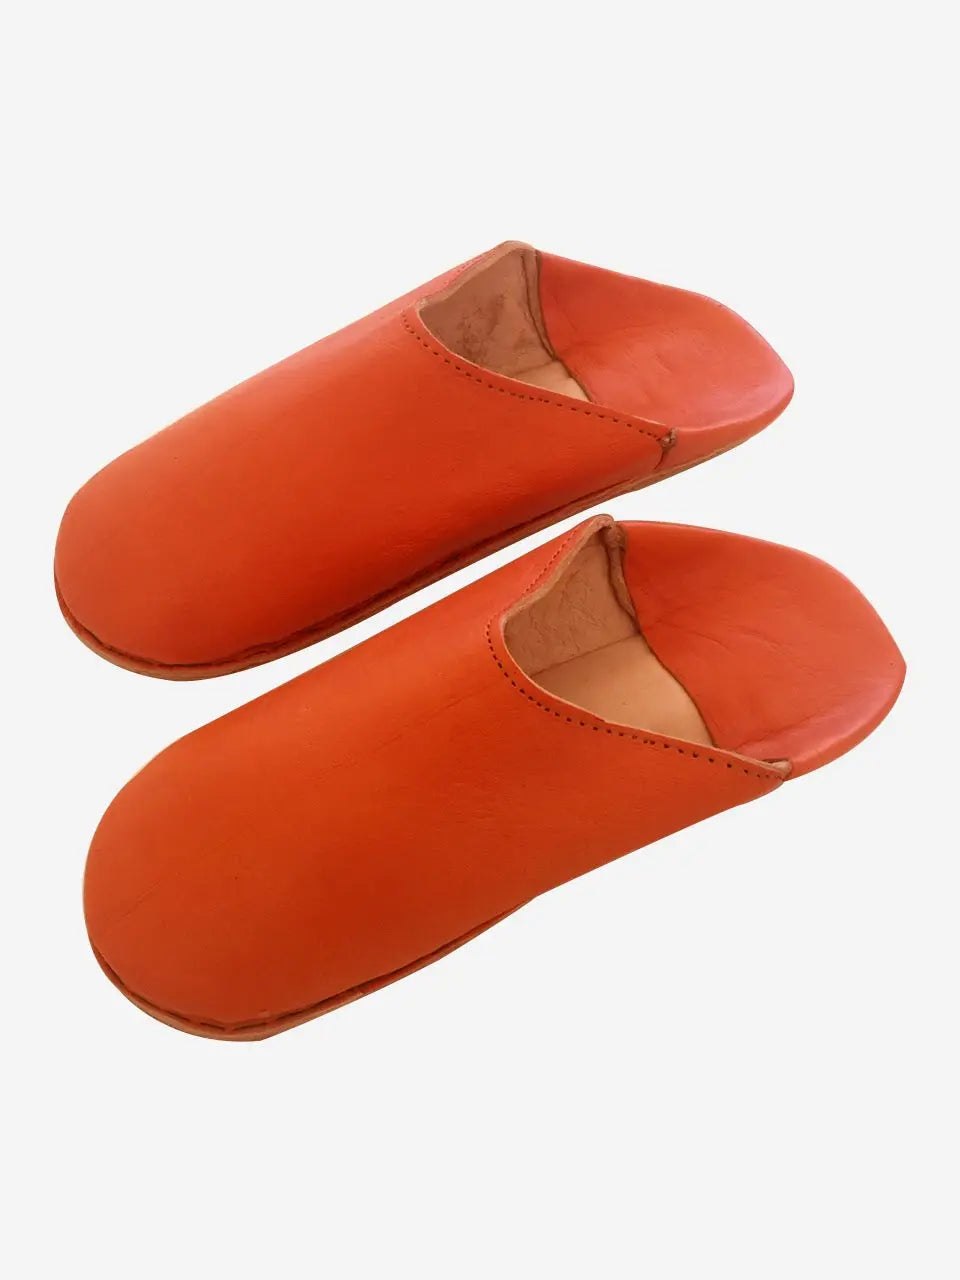 Premium Moroccan Leather Slippers: Indulge in Luxury Biyadina Store